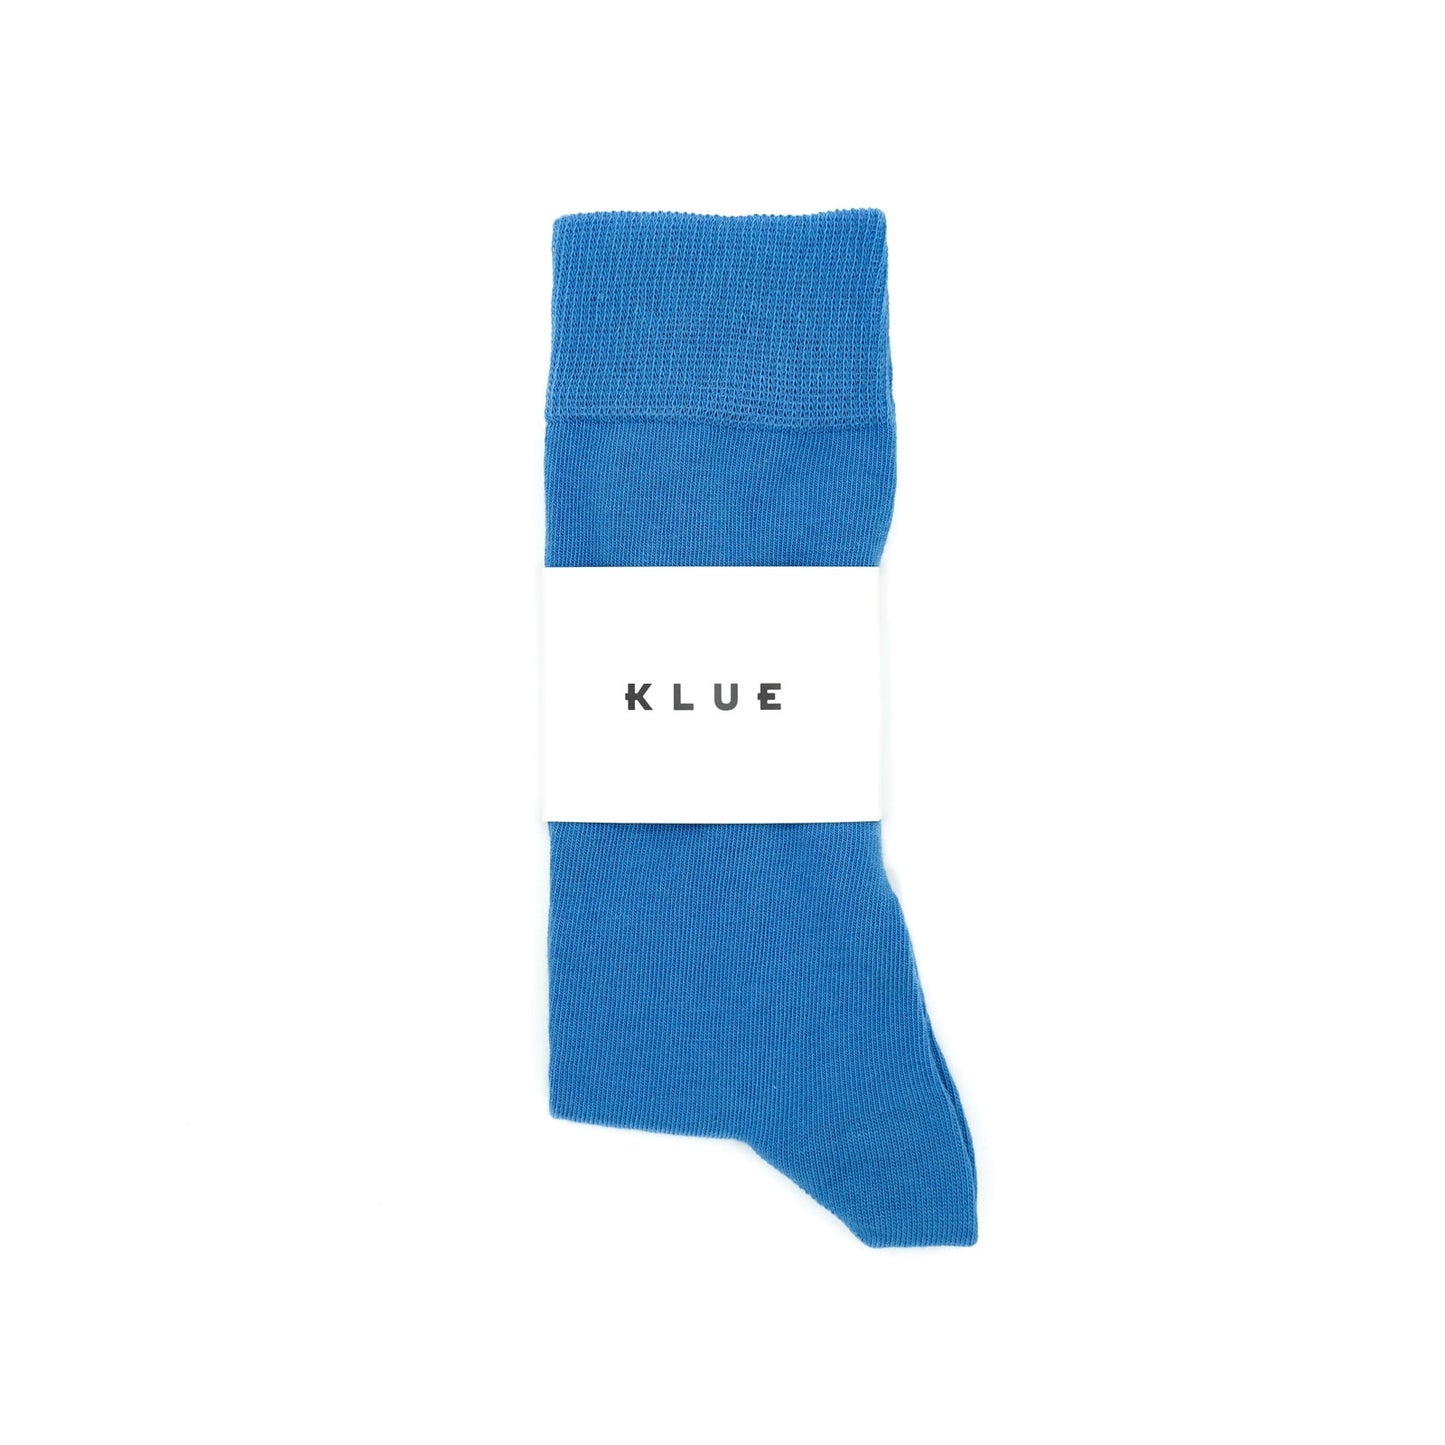 Klue Solid Socks in Blue